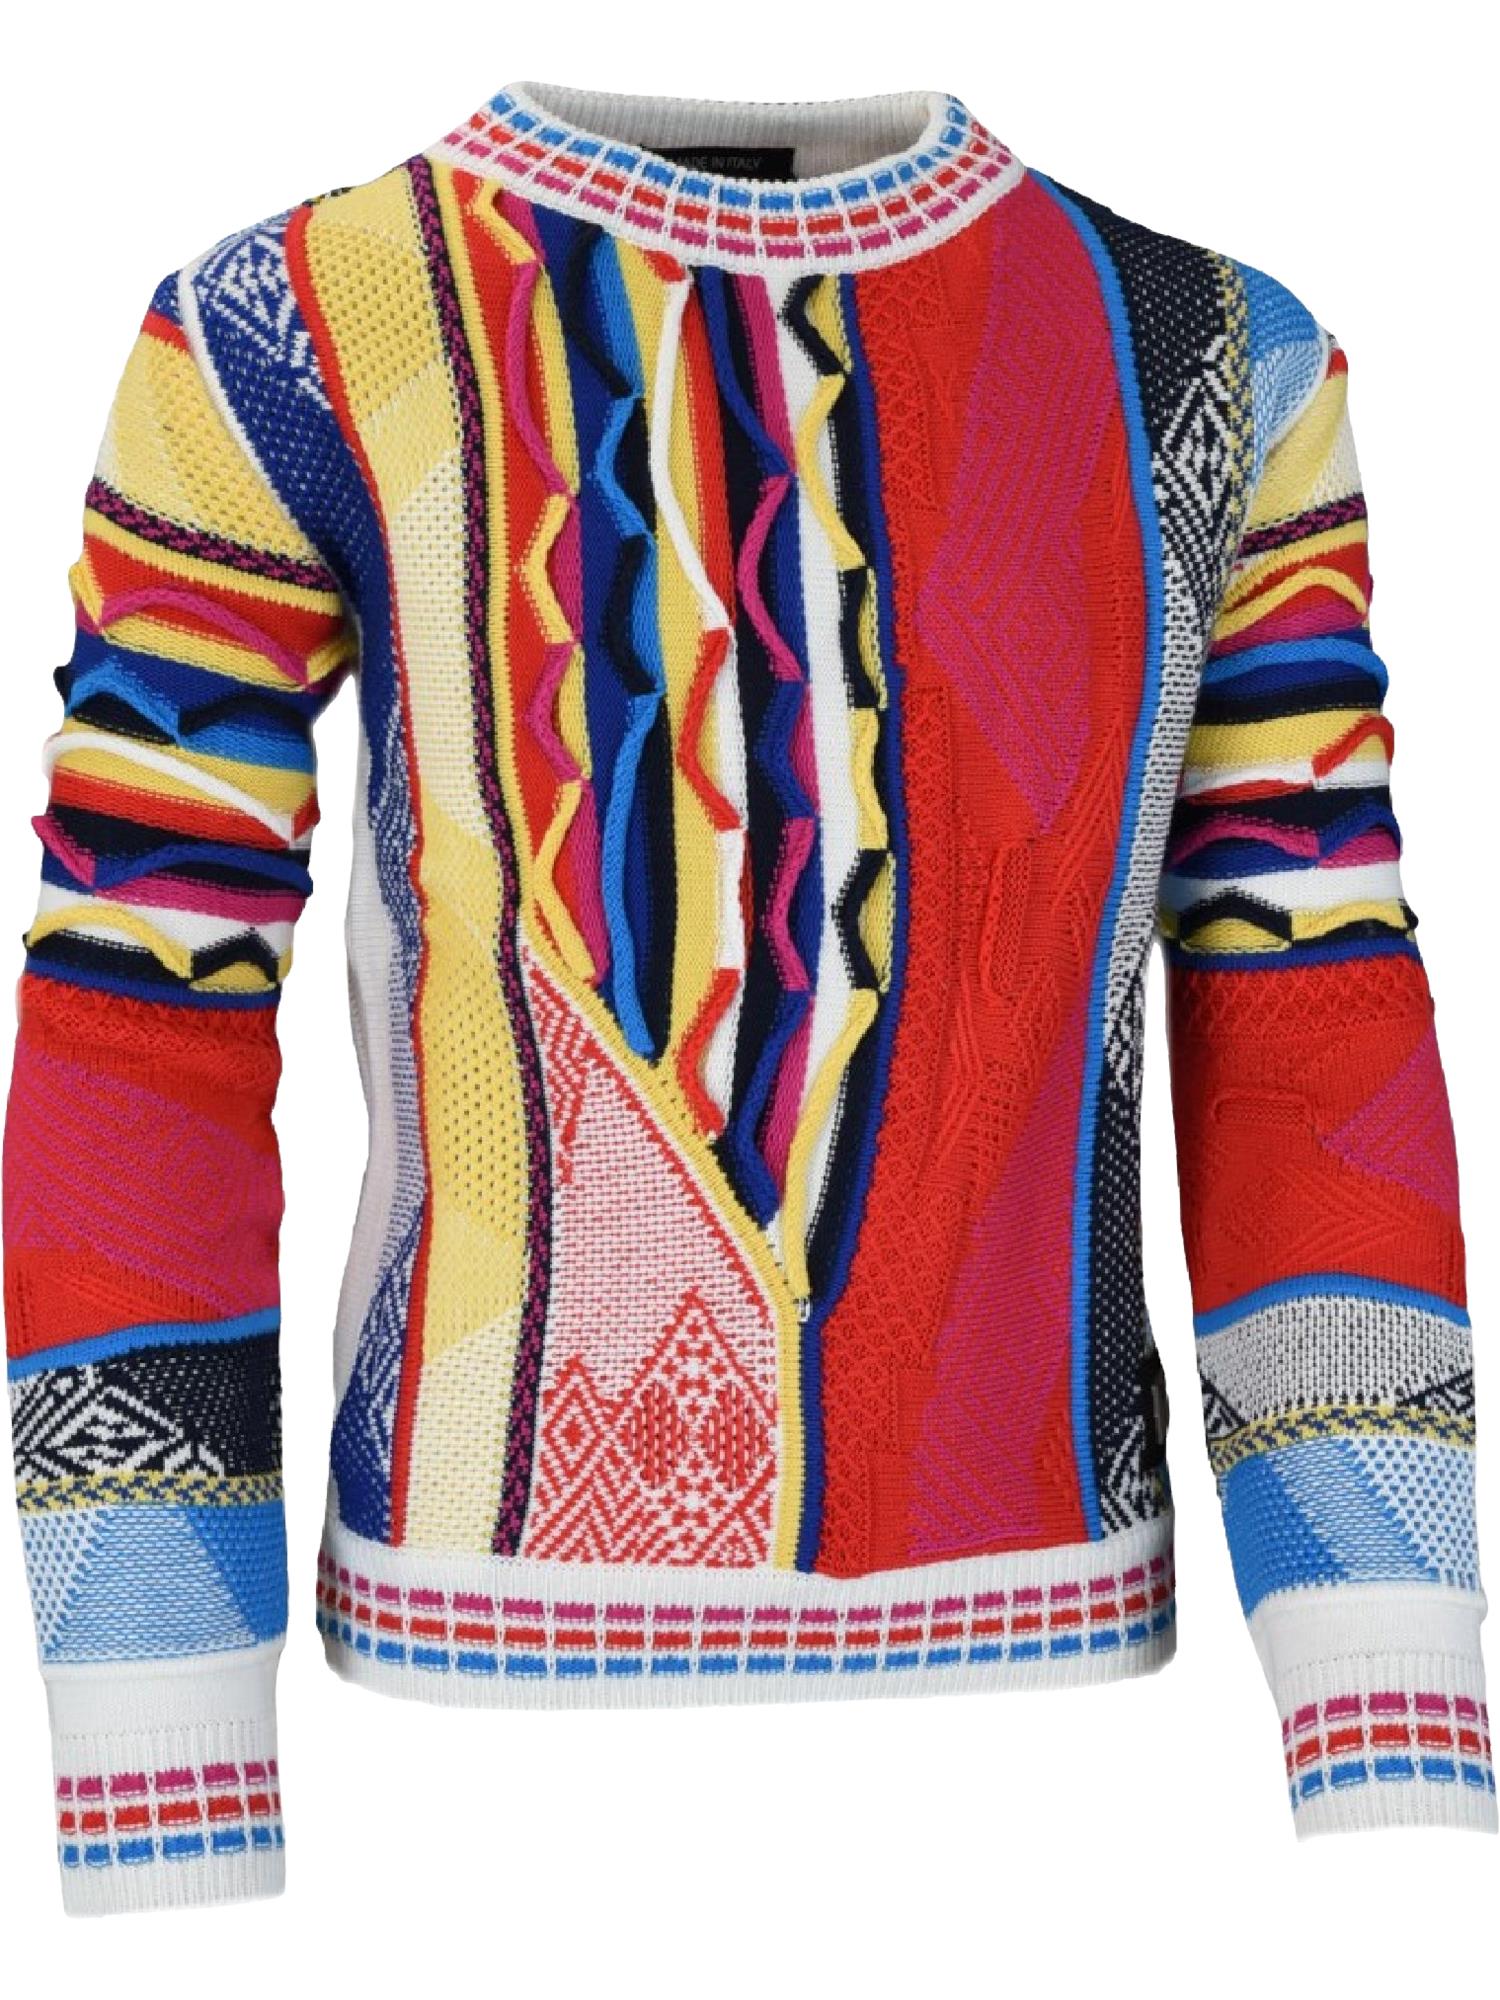 Пуловер Carlo Colucci Rundhals Casna, красный пуловер carlo colucci rundhals casna красный